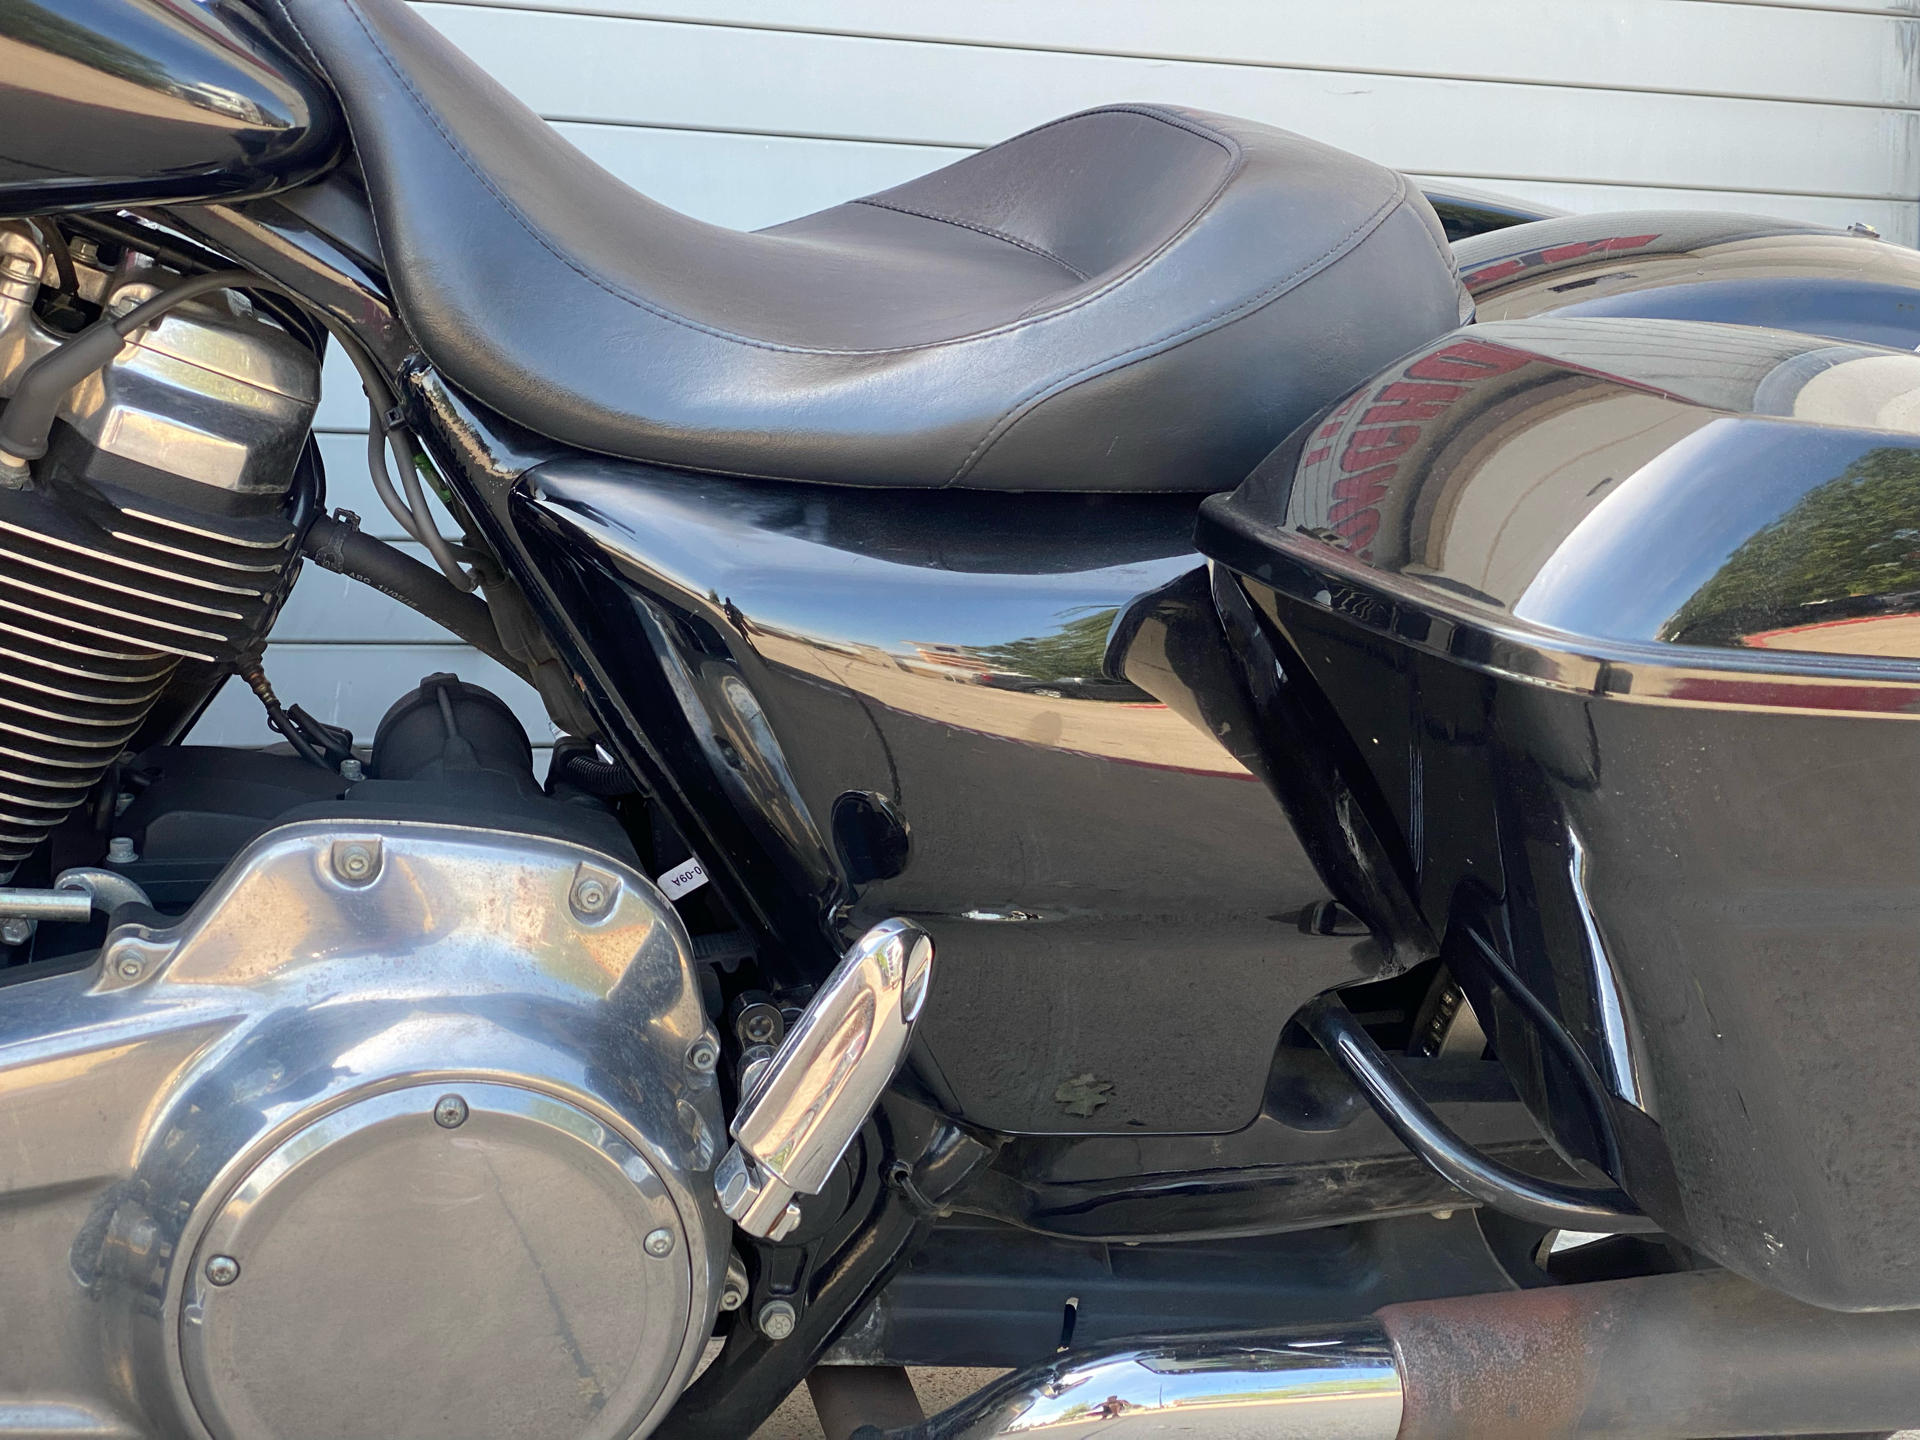 2019 Harley-Davidson Electra Glide® Standard in Grand Prairie, Texas - Photo 16